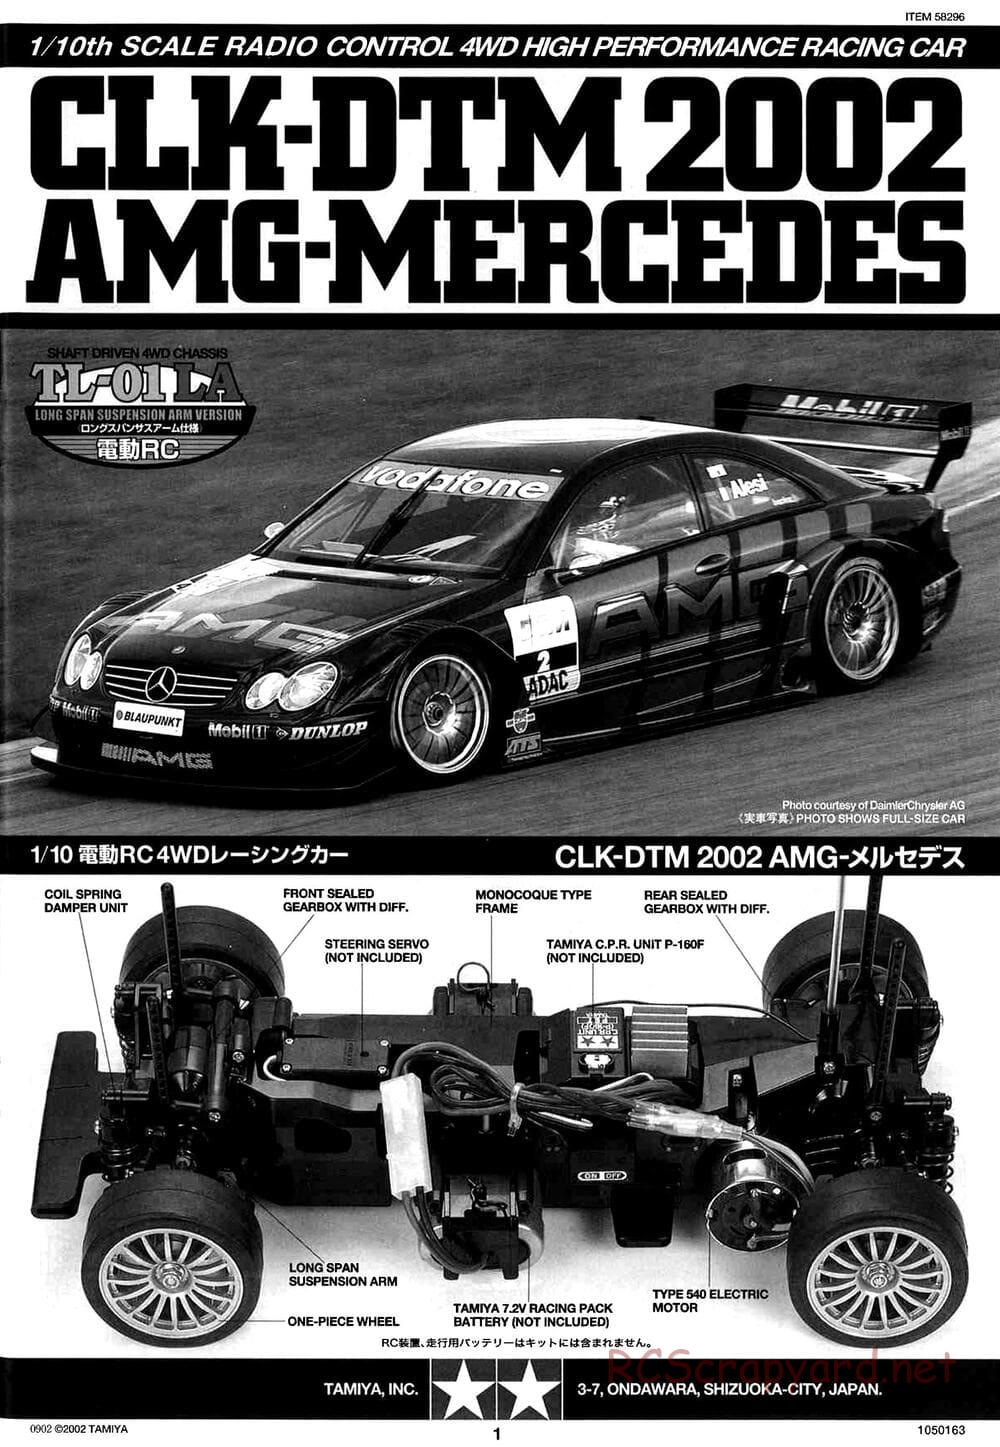 Tamiya - CLK DTM 2002 AMG Mercedes - TL-01 LA Chassis - Manual - Page 1